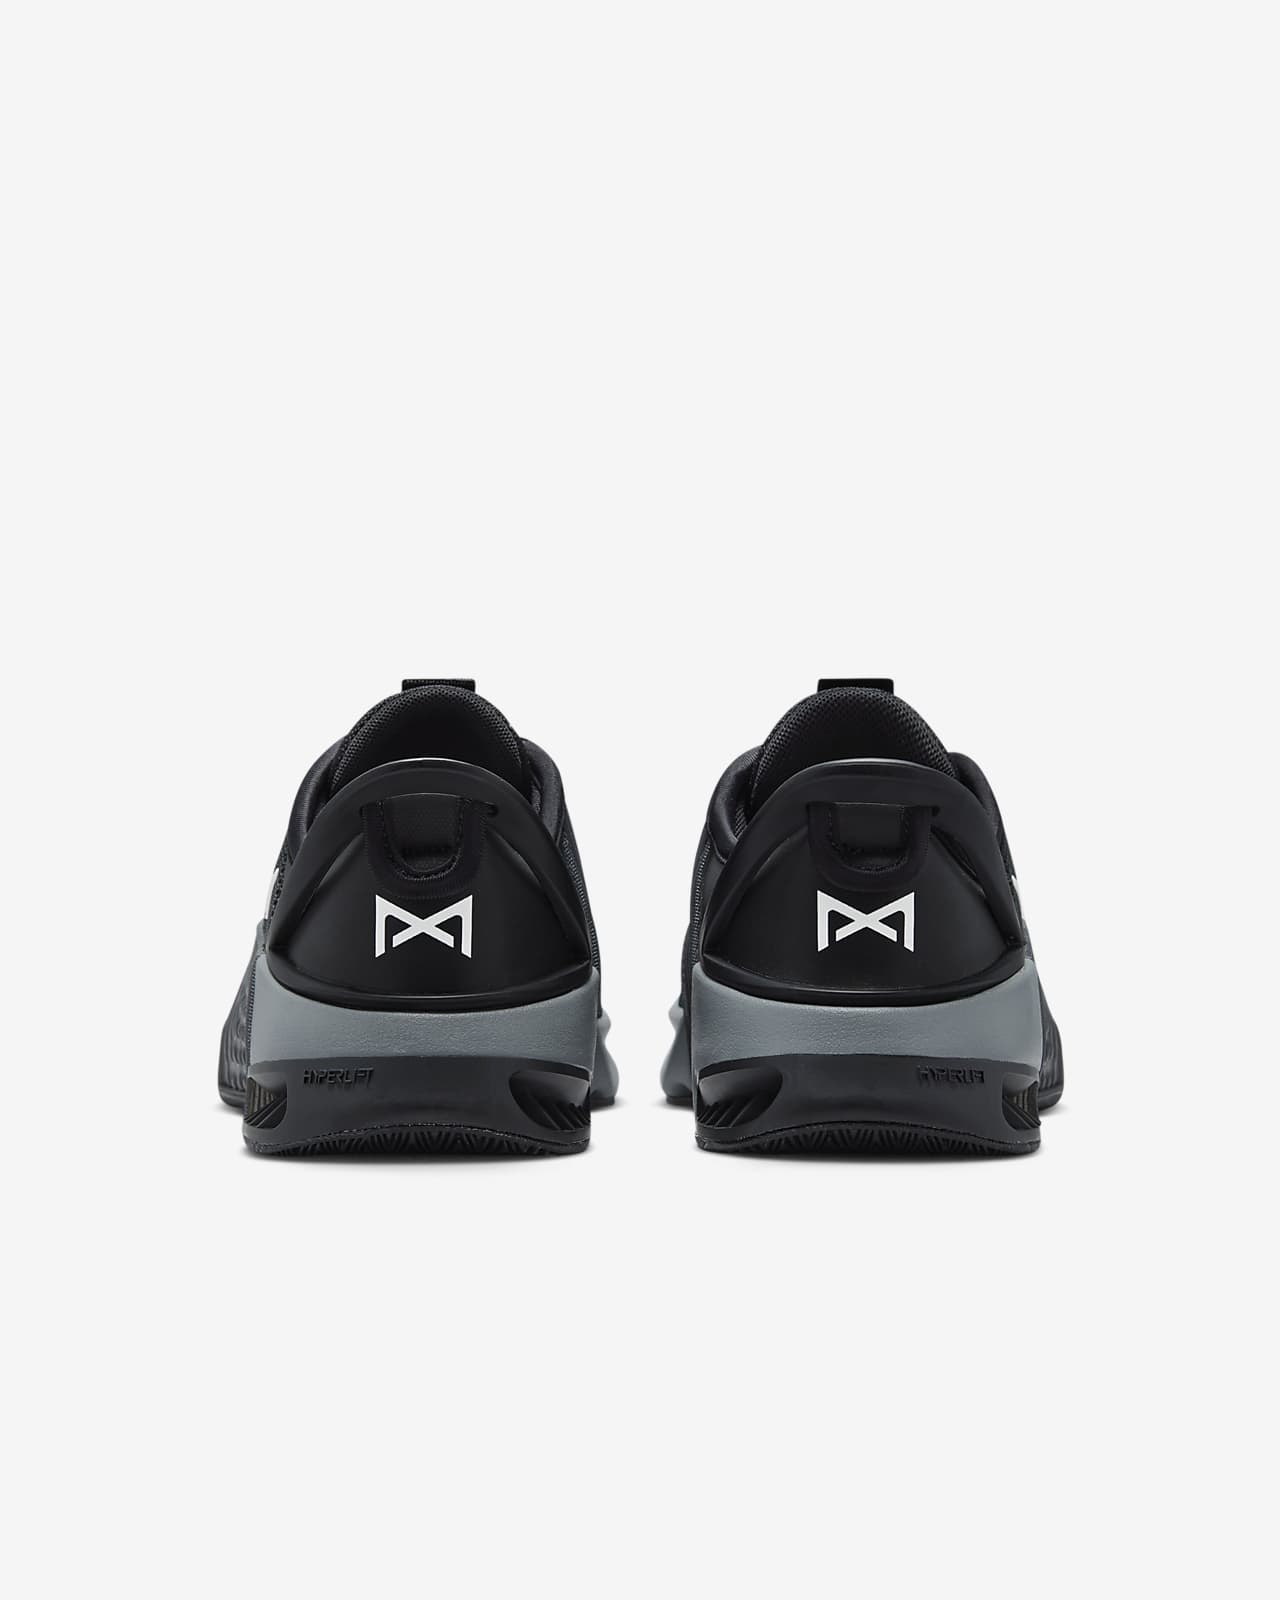 Nike, Metcon 9 Men's Training Shoes, Training Shoes